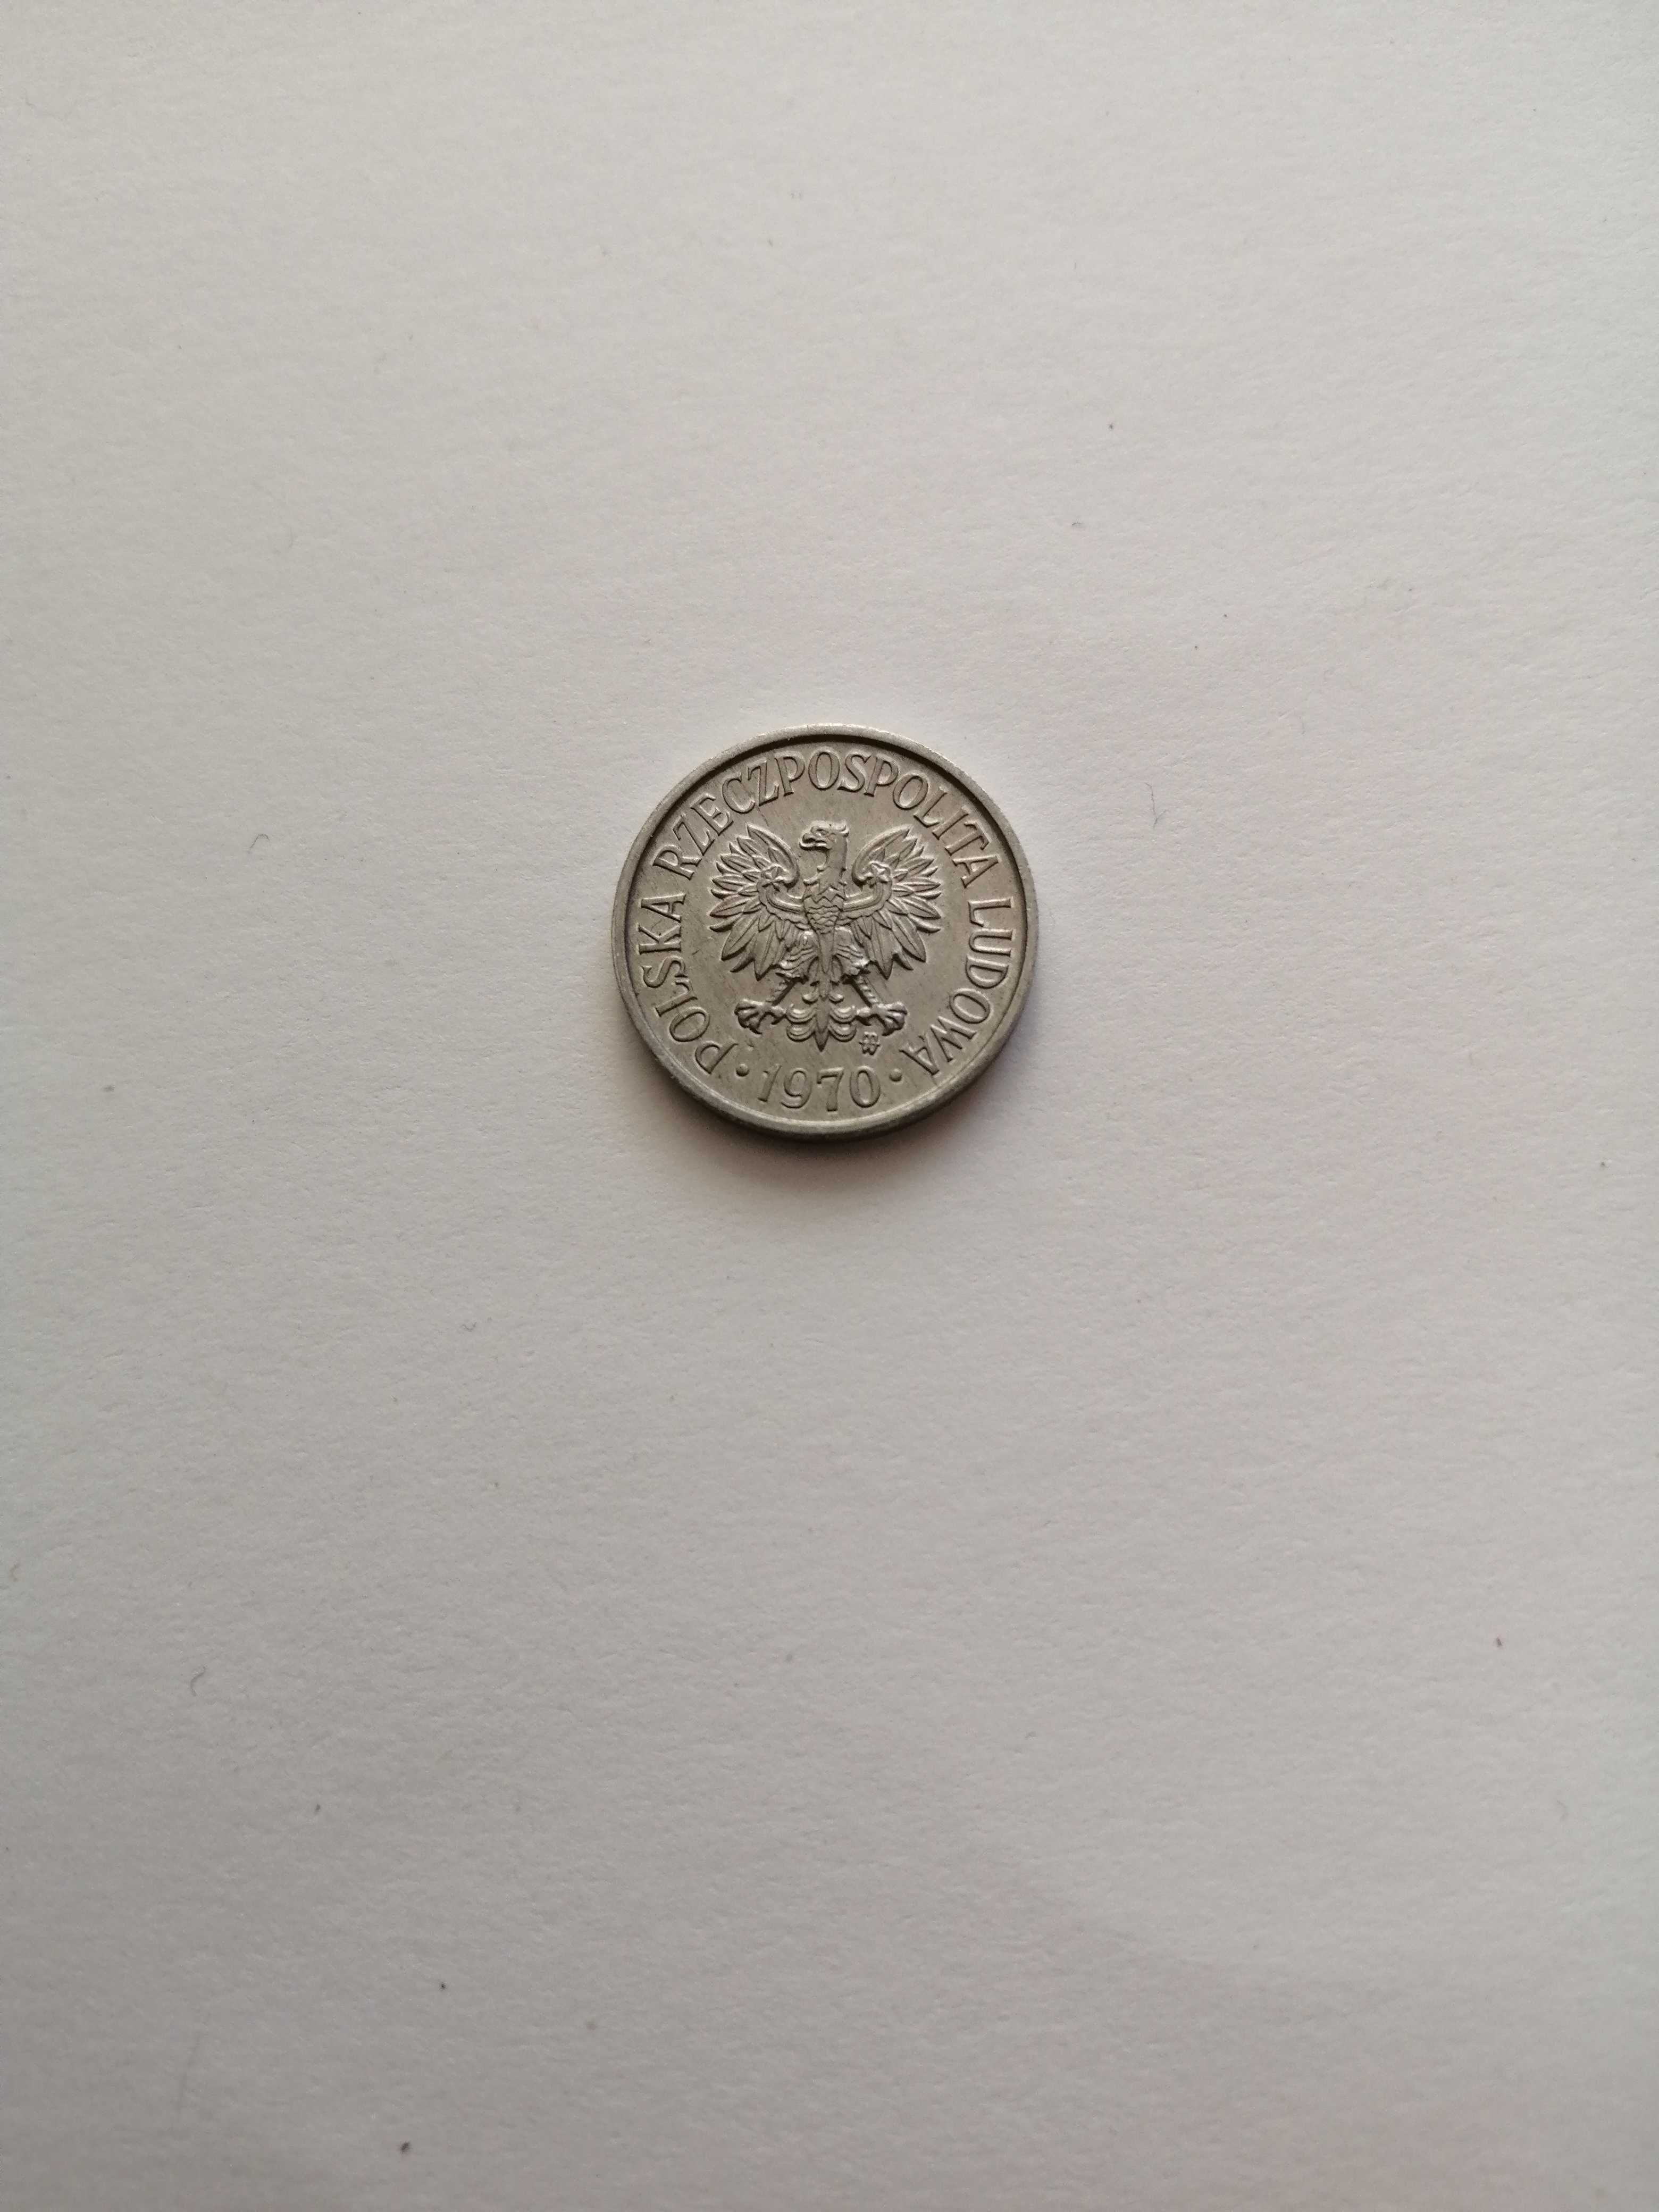 Moneta 5 groszy 1970 mennicza, piękna